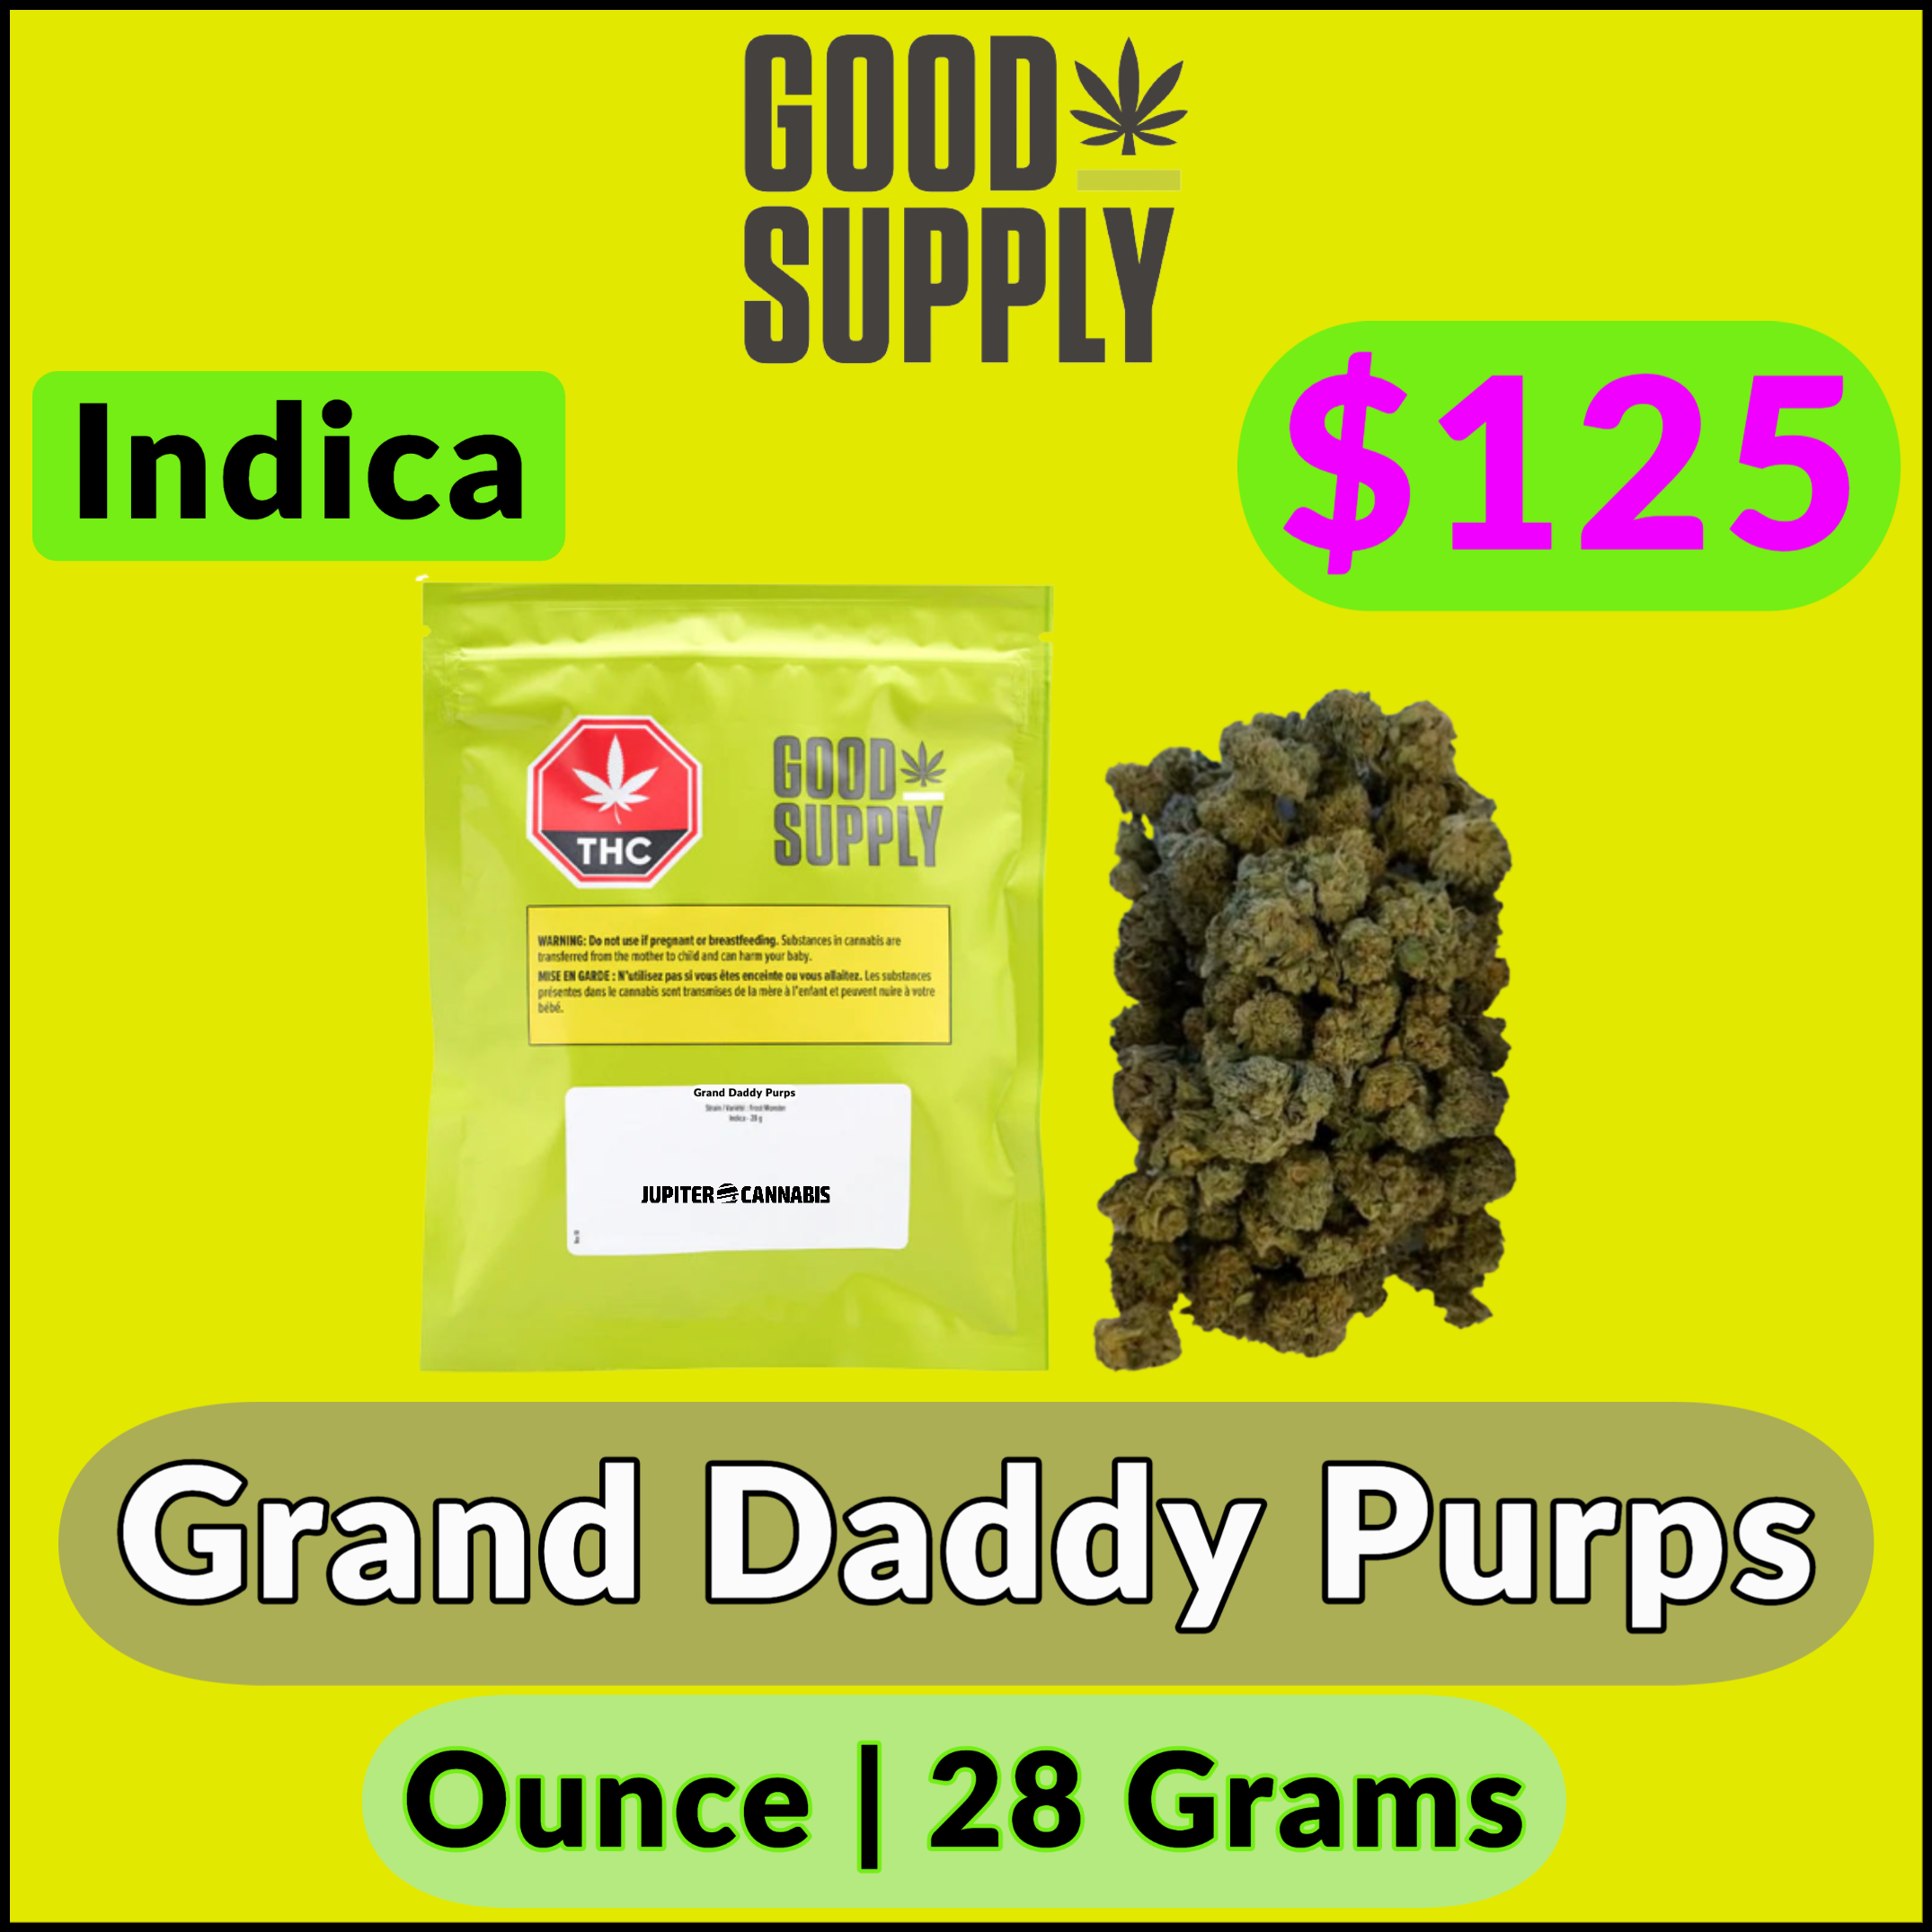 Grand Daddy Purps Ounce by Good Supply | Jupiter Cannabis Winnipeg